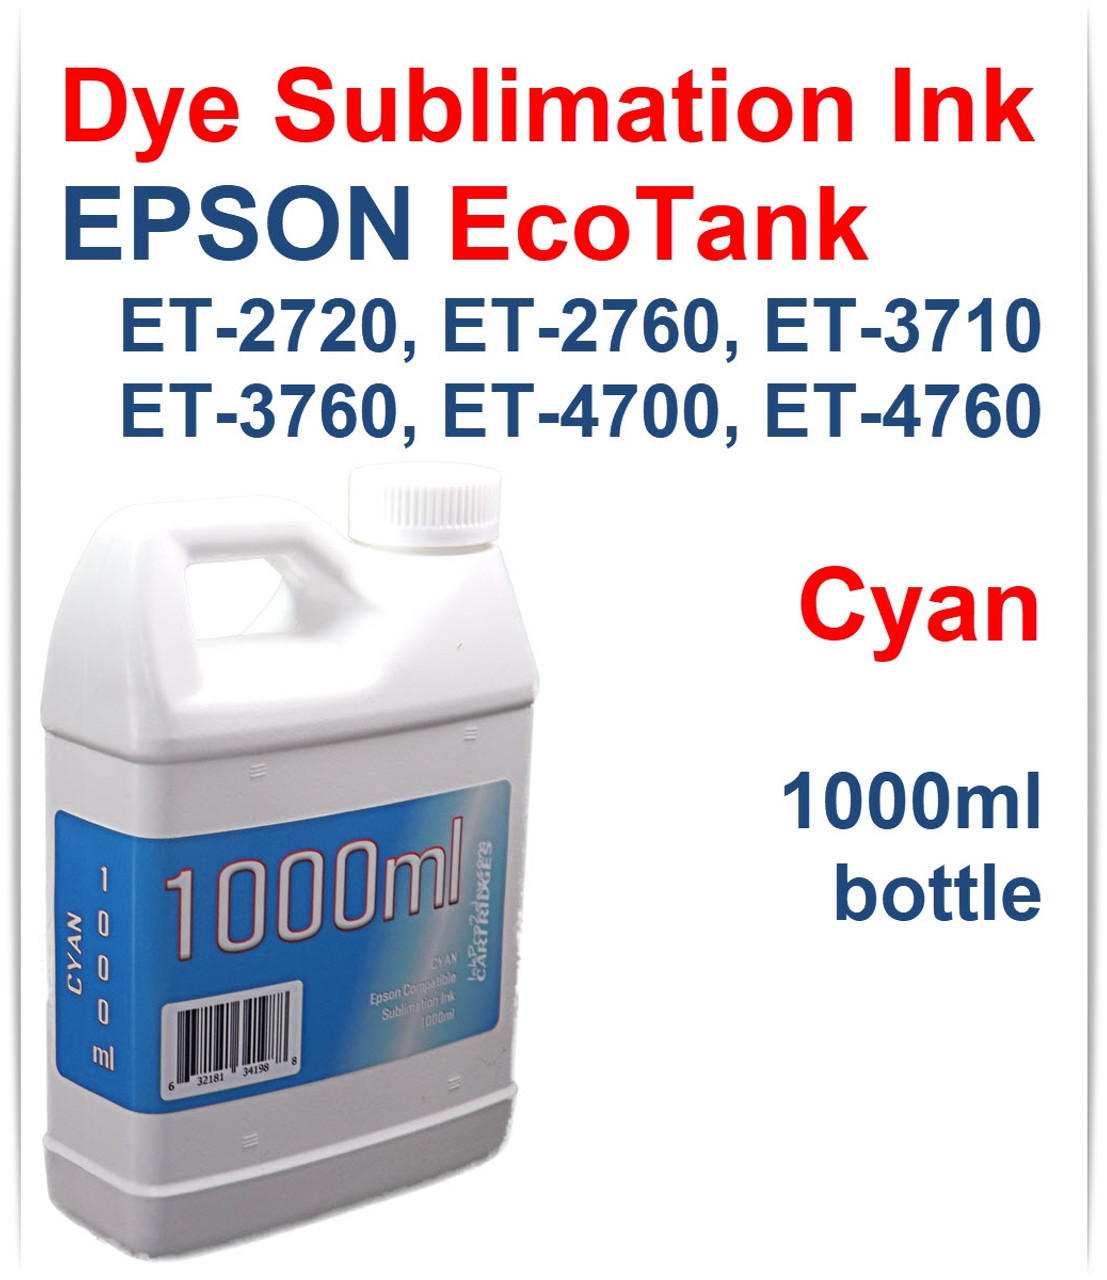 Cyan EPSON EcoTank ET-4700 ET-4760 Printer 1000ml bottles Dye Sublimation Bottle Ink